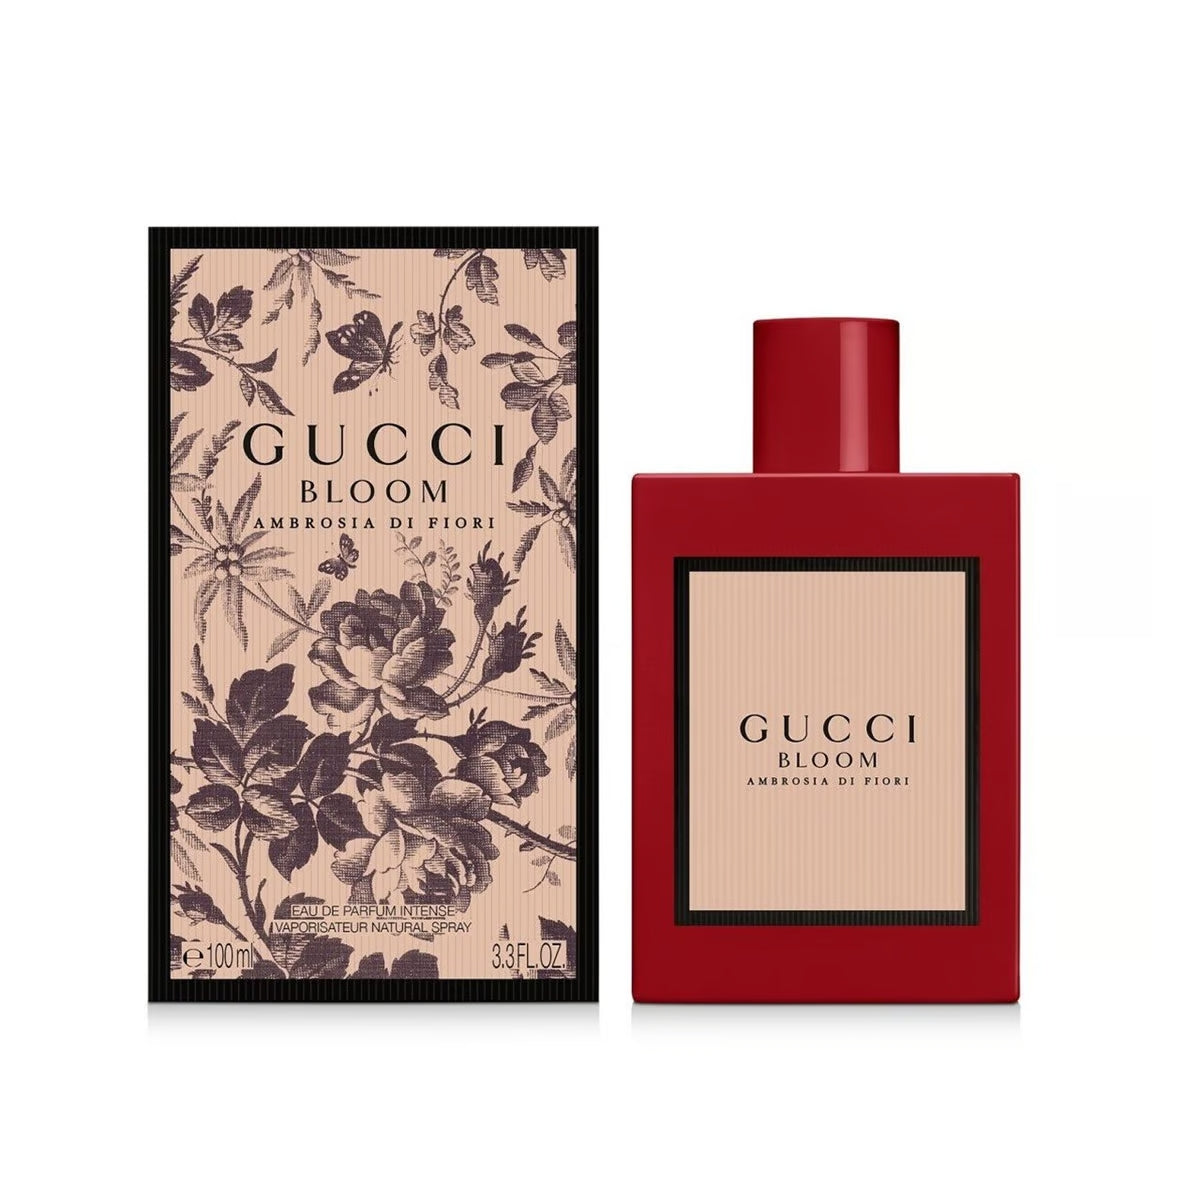 Gucci Bloom Ambrosia Di Fiori Eau De Parfum for Women 100 ml